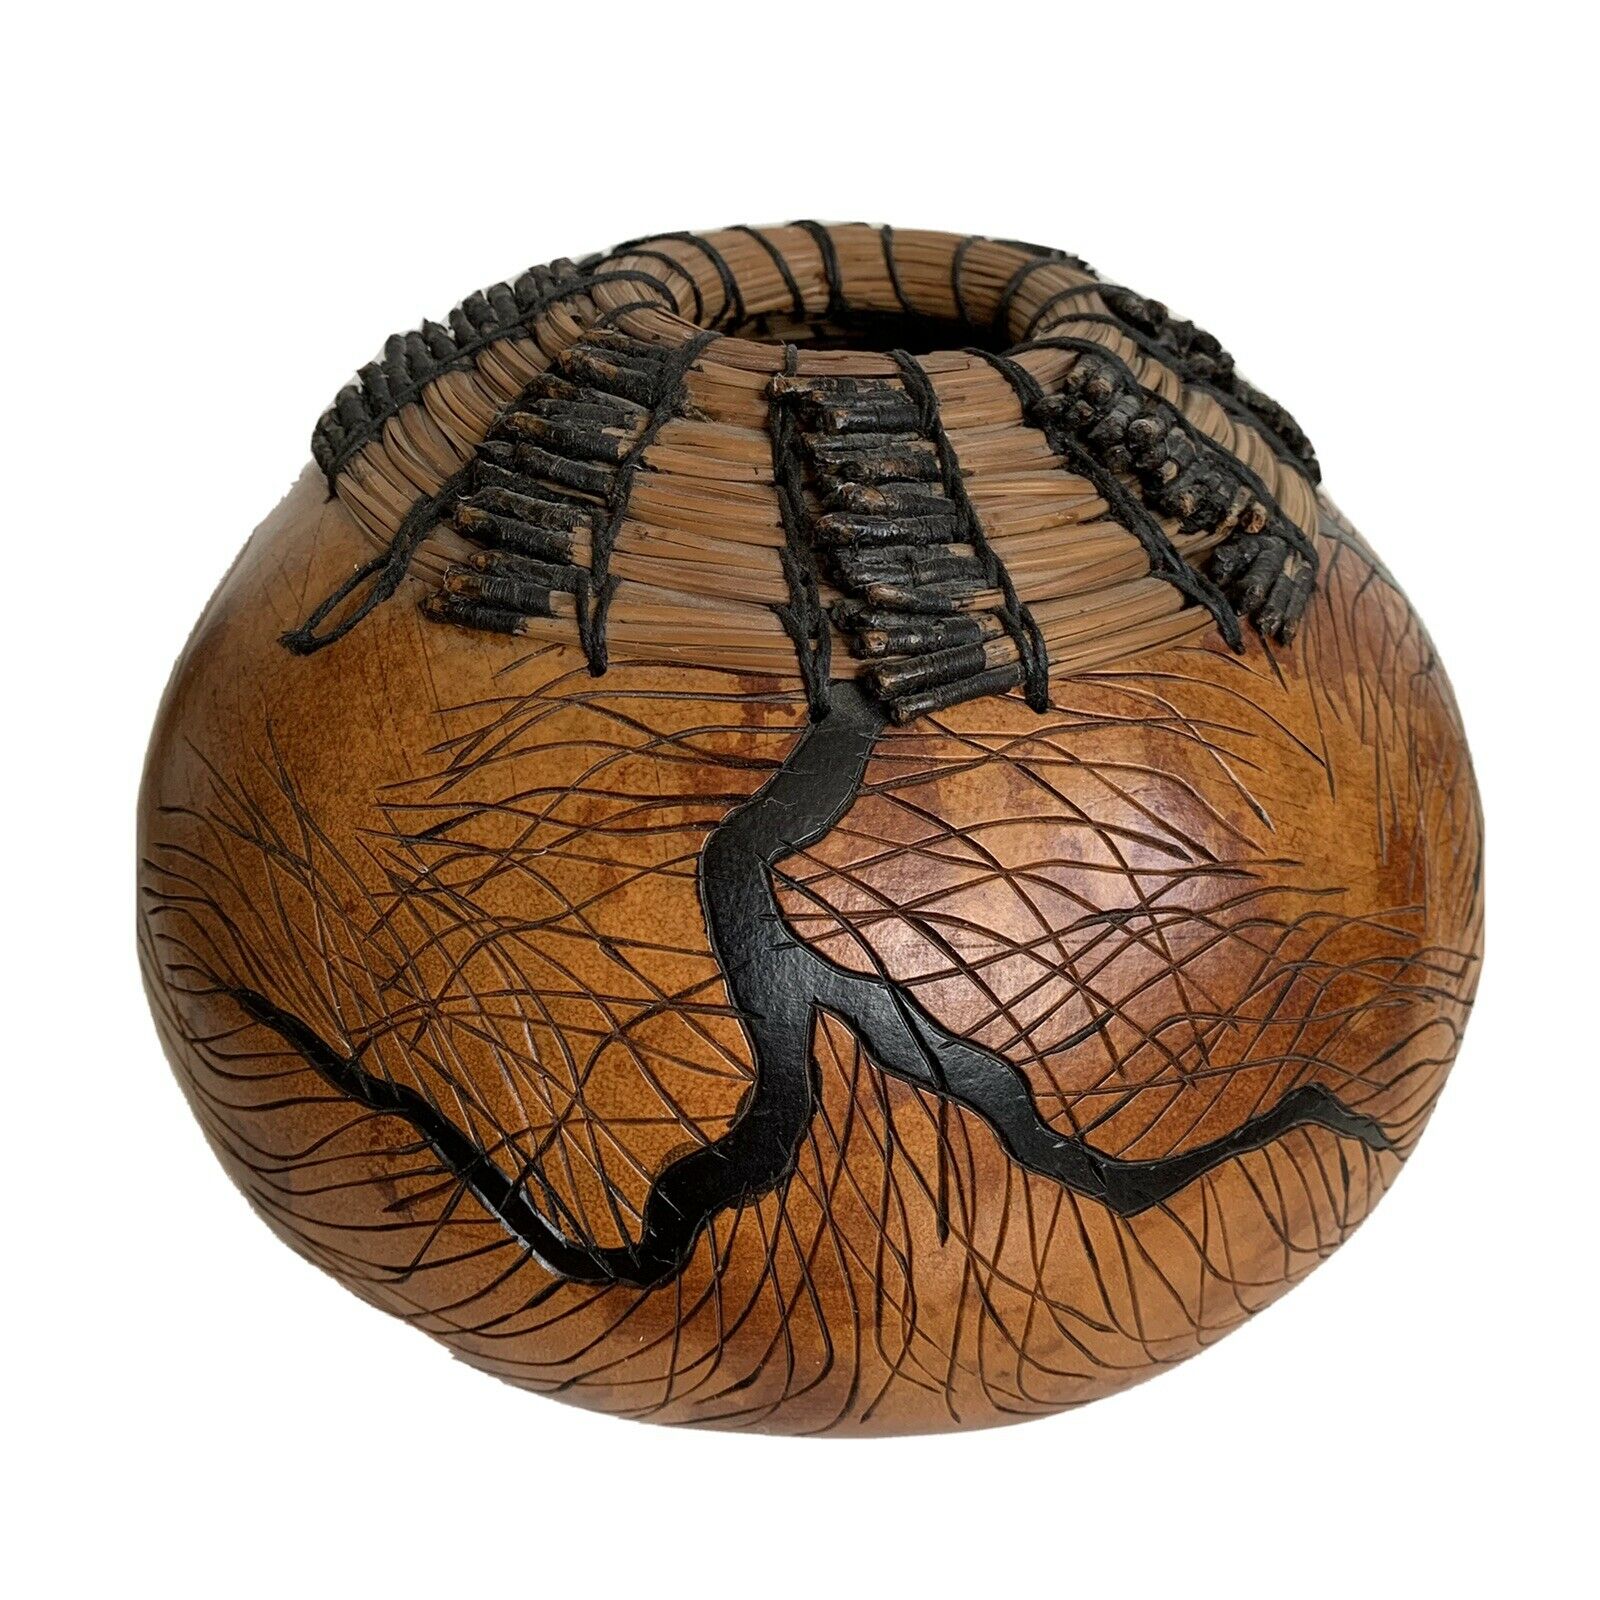 Primitive Don Weeke Painted Incised Gourd Basket Bowl Studio Art Signed 1988